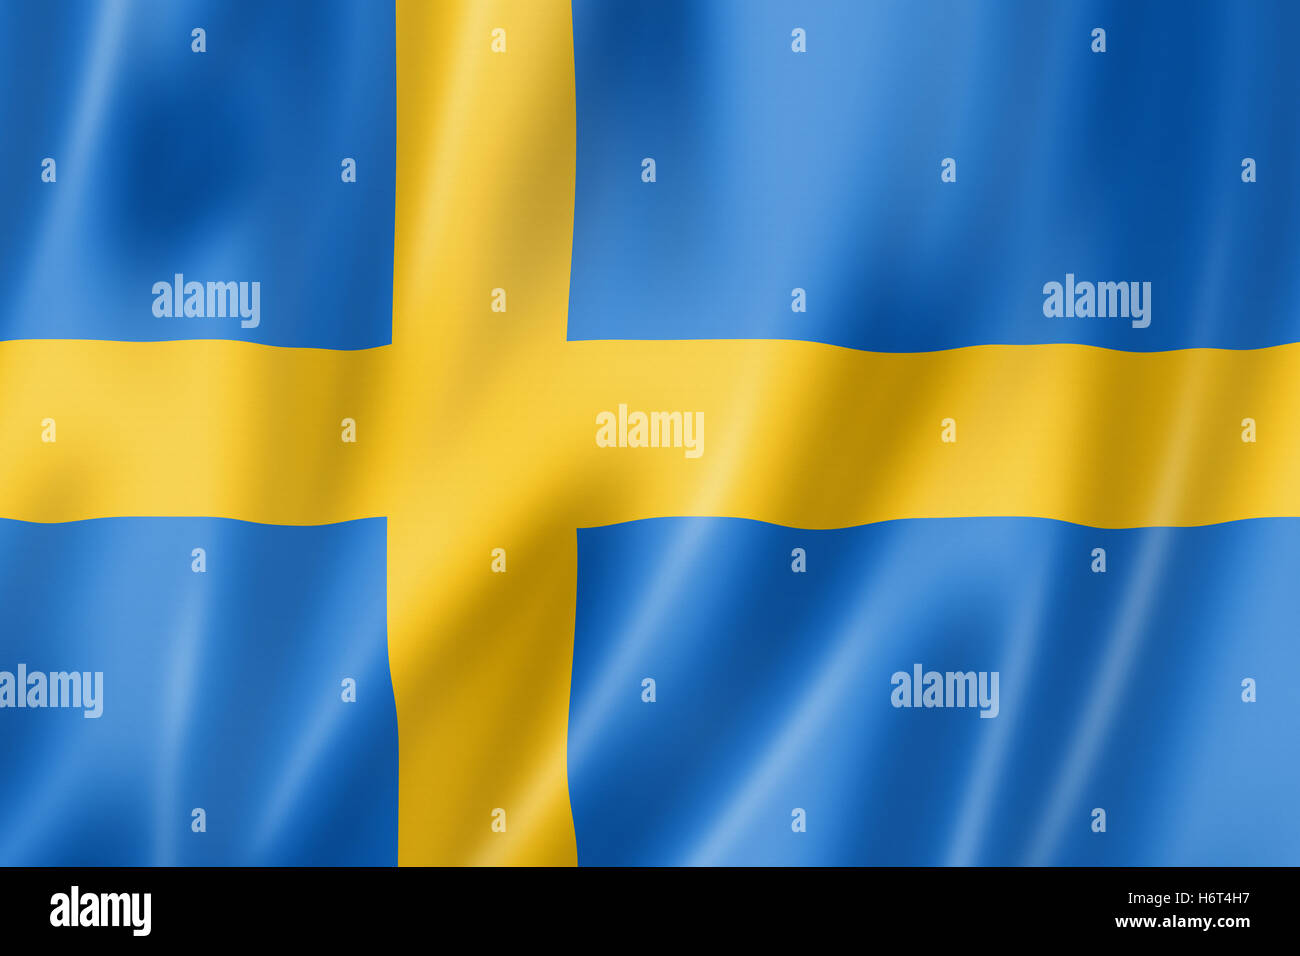 sweden flag textile swedish blue model design project concept plan draft closeup europe sweden illustration flag front view Stock Photo